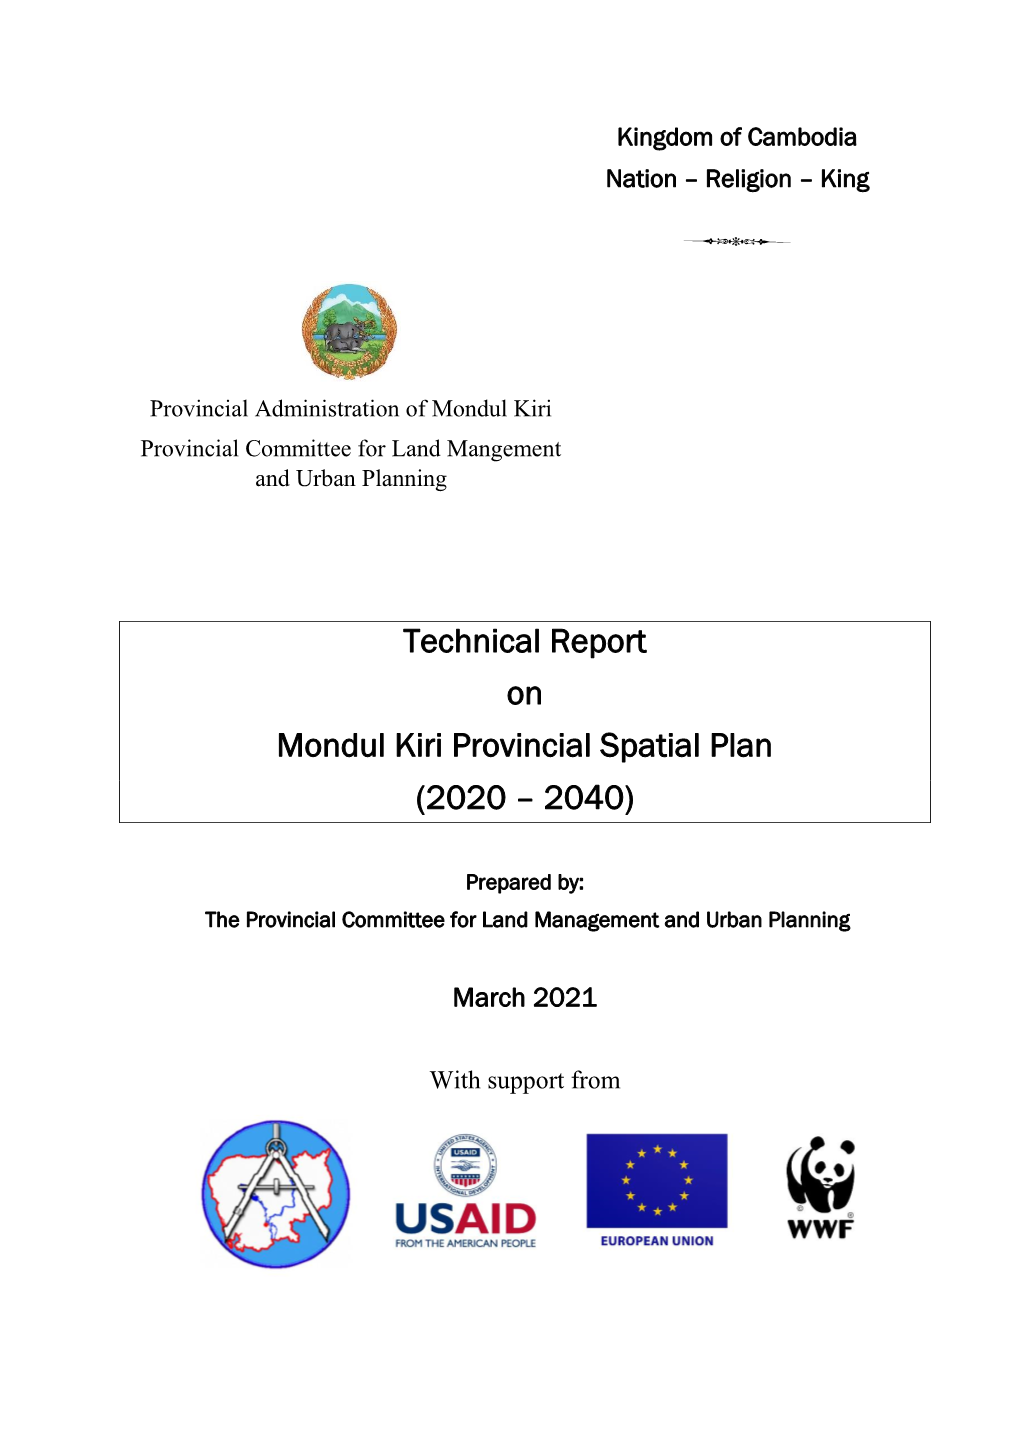 Technical Report on Mondul Kiri Provincial Spatial Plan (2020 – 2040)